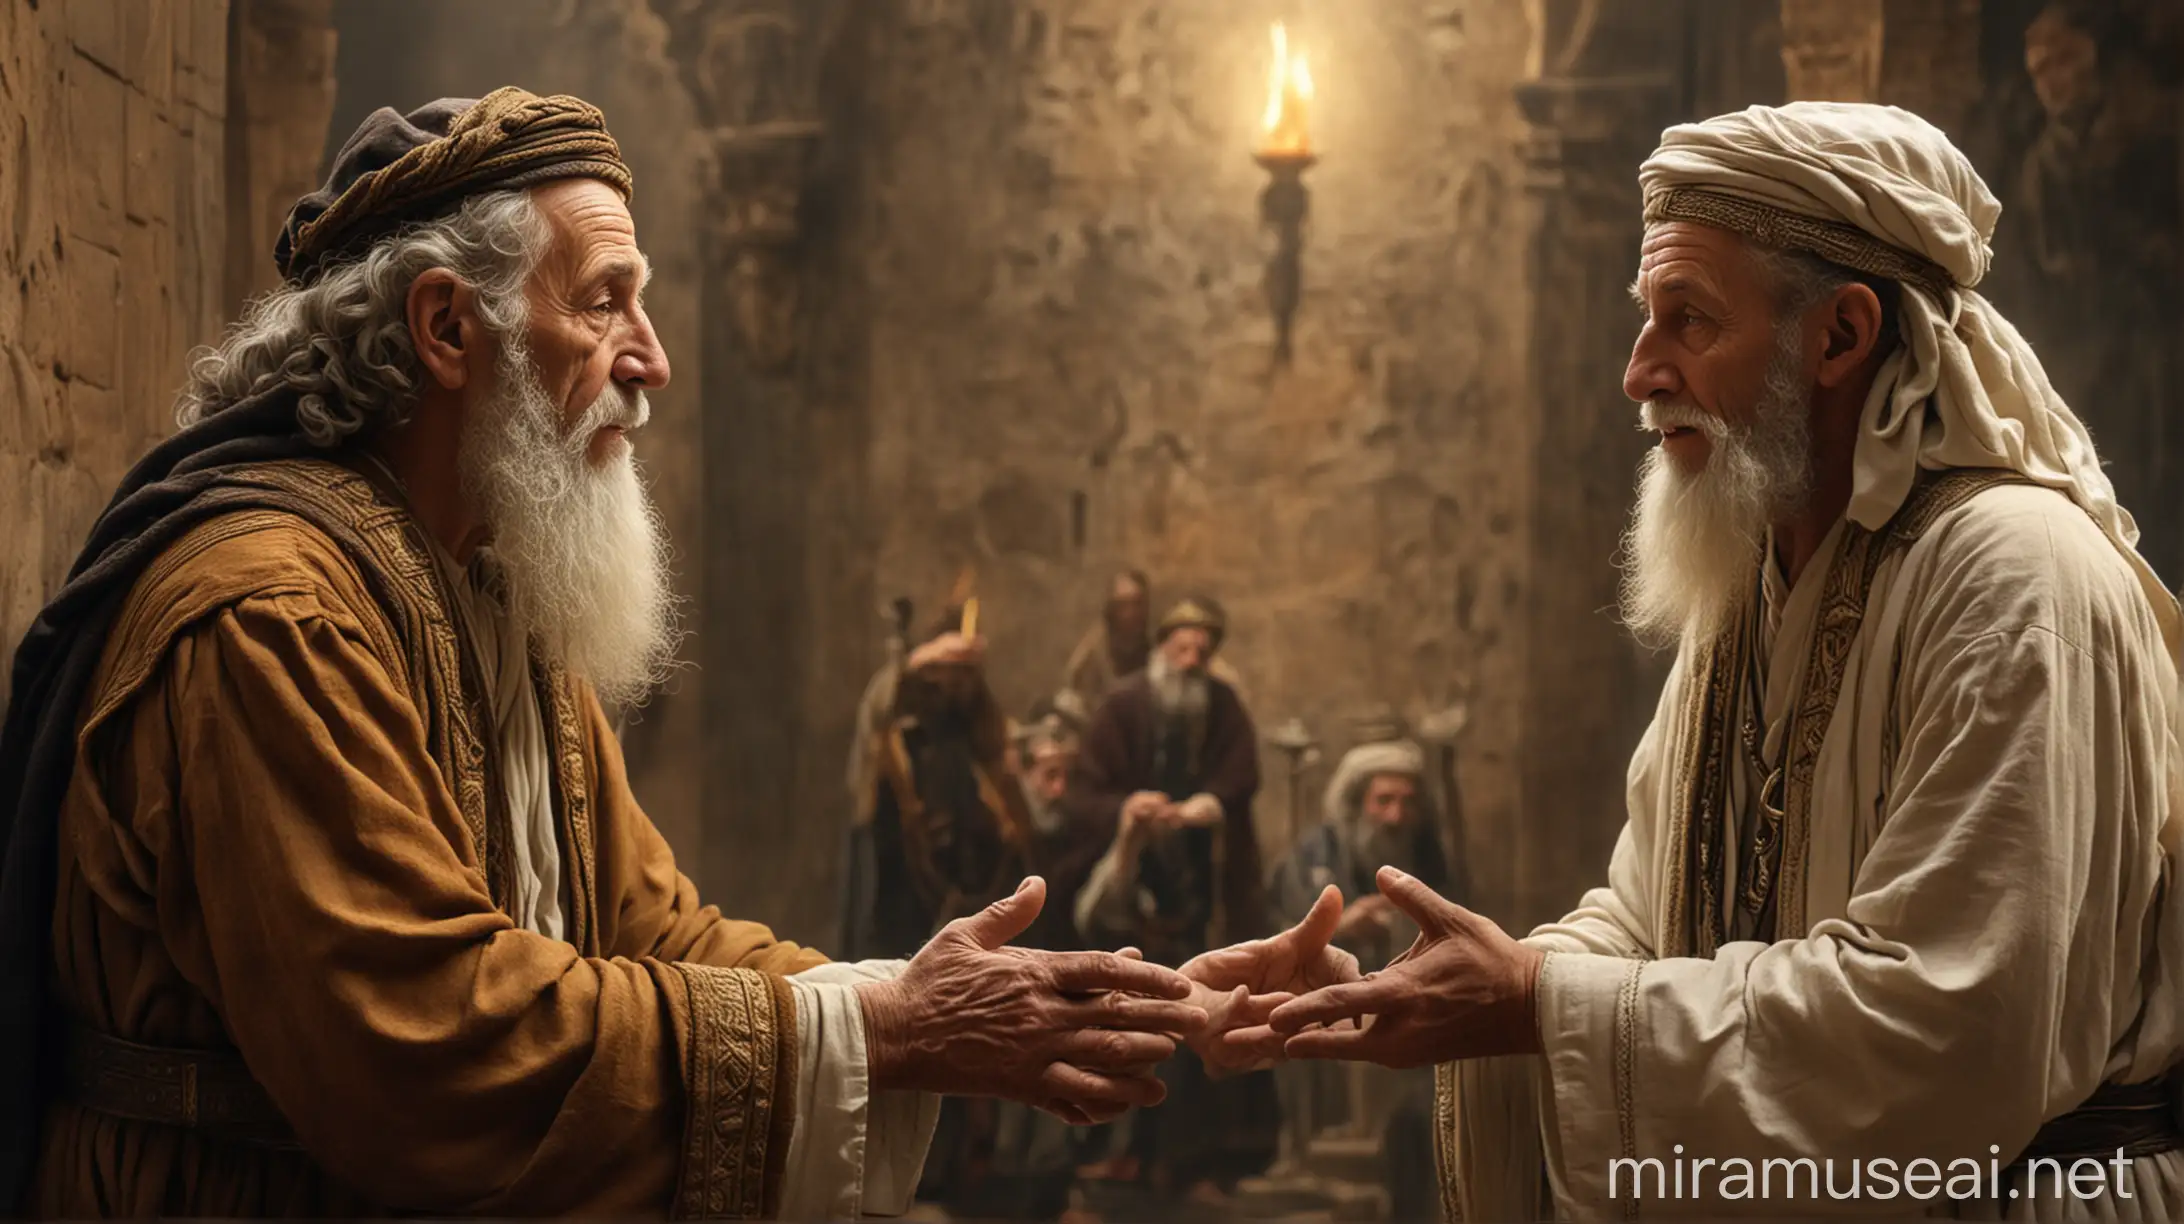 Ancient Jewish High Priest Conversing with Elderly Jewish Man